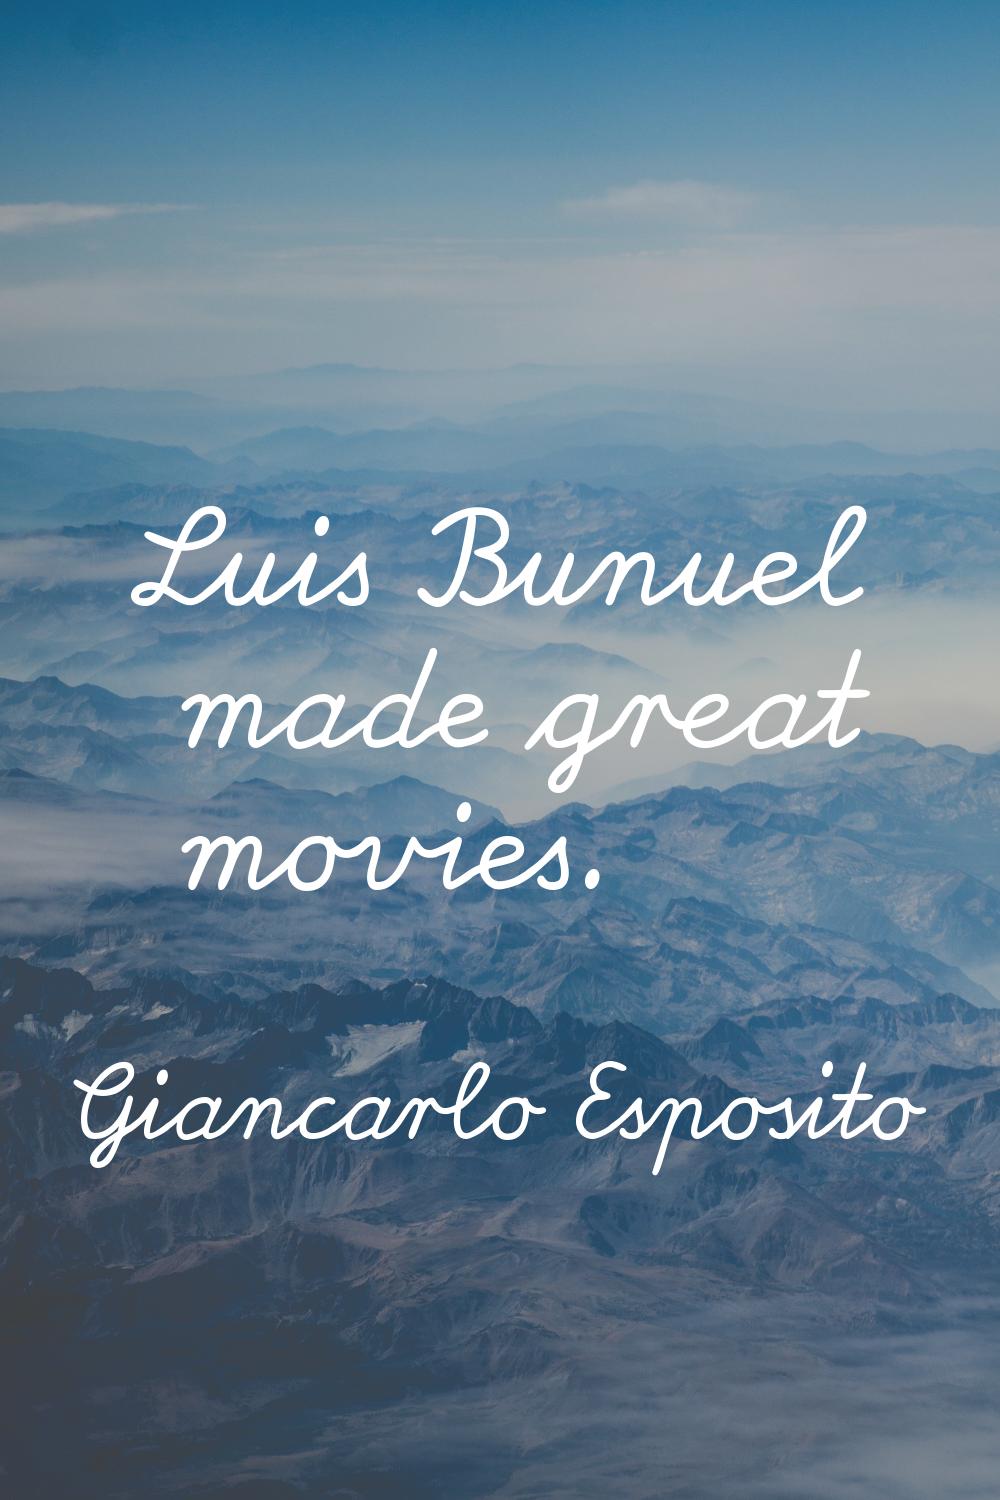 Luis Bunuel made great movies.